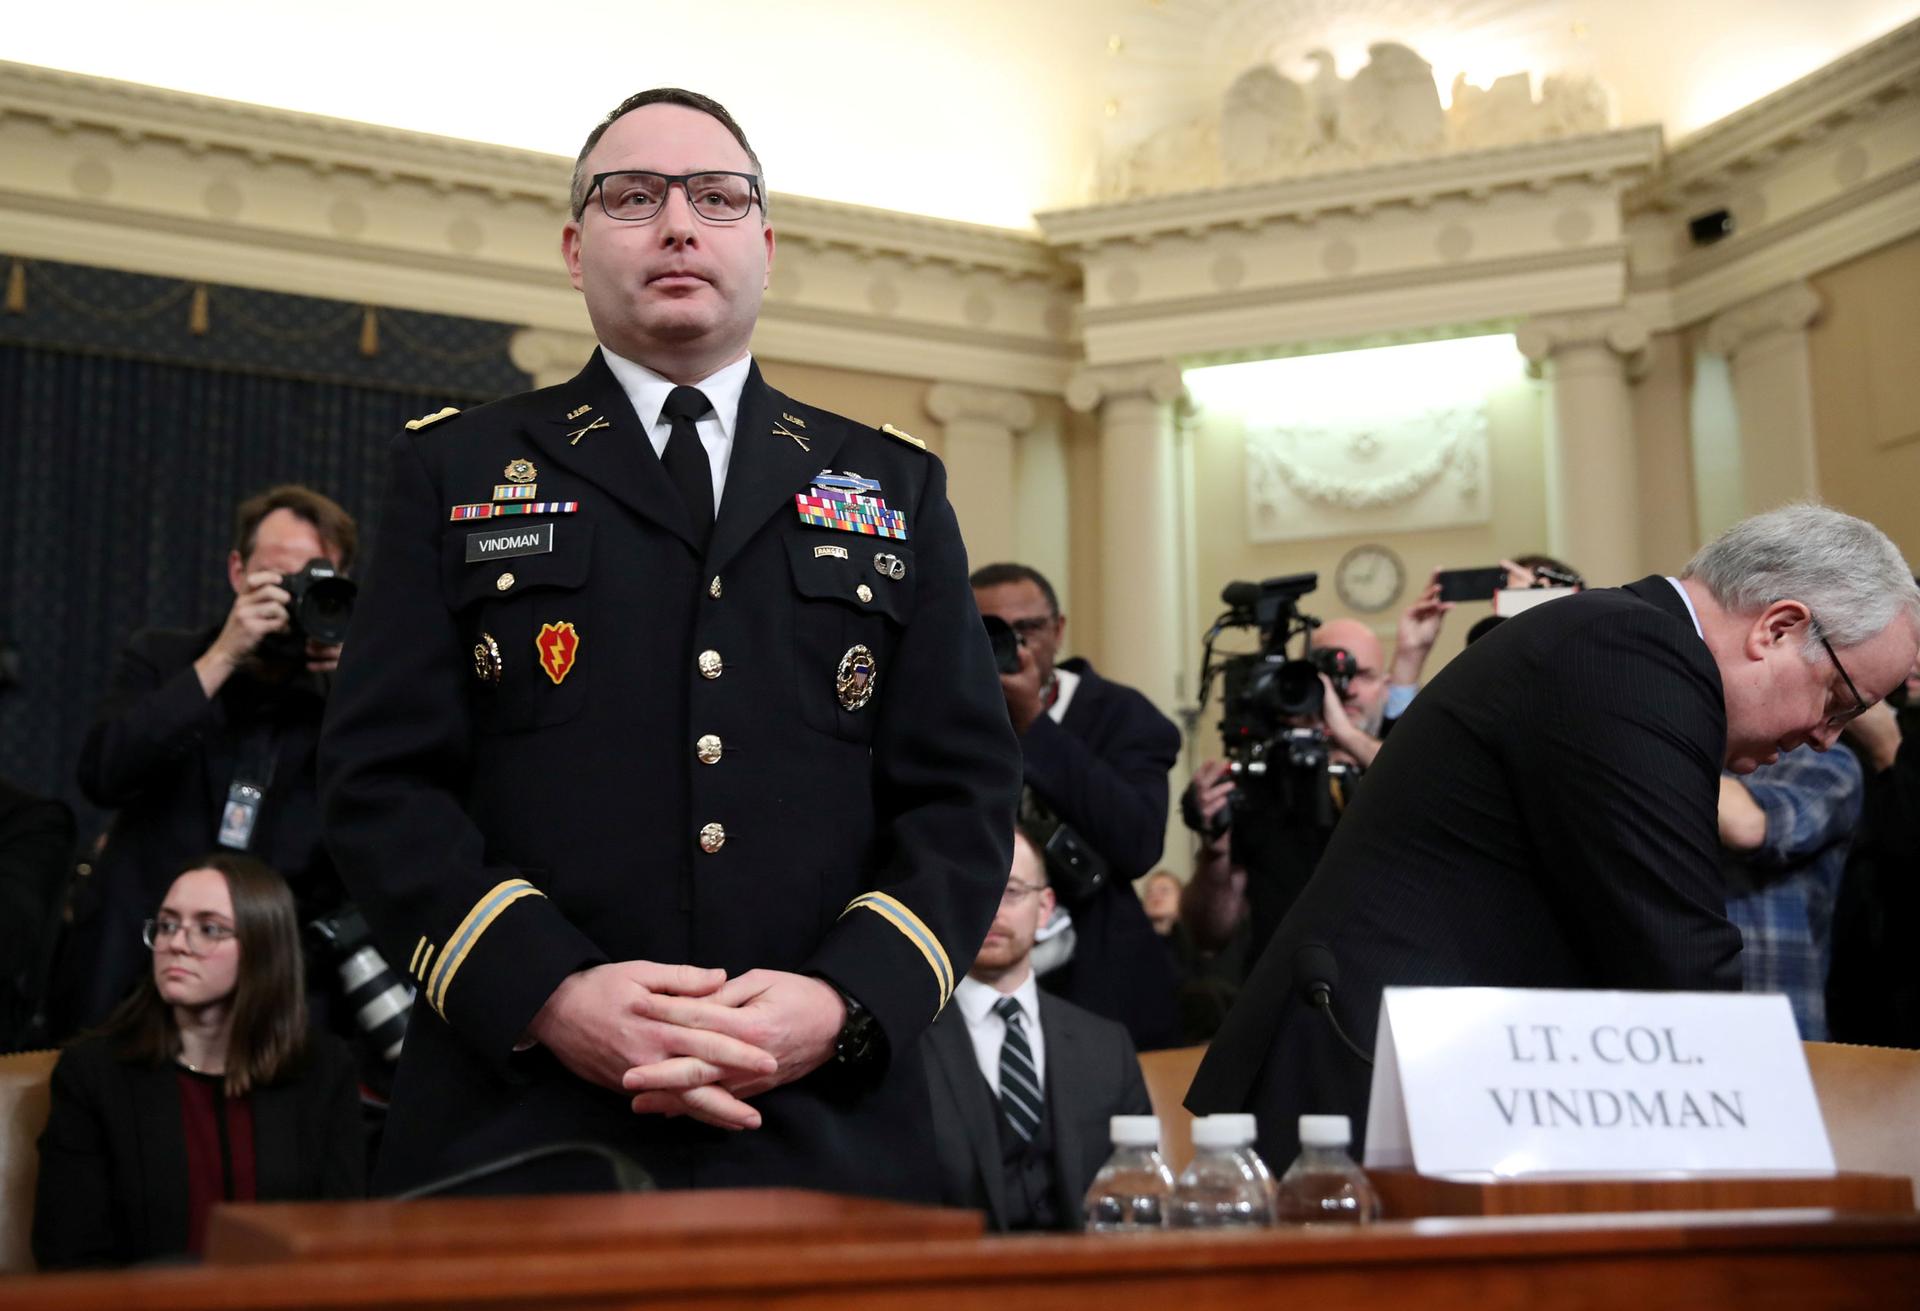 A man in uniform stands behind a desk